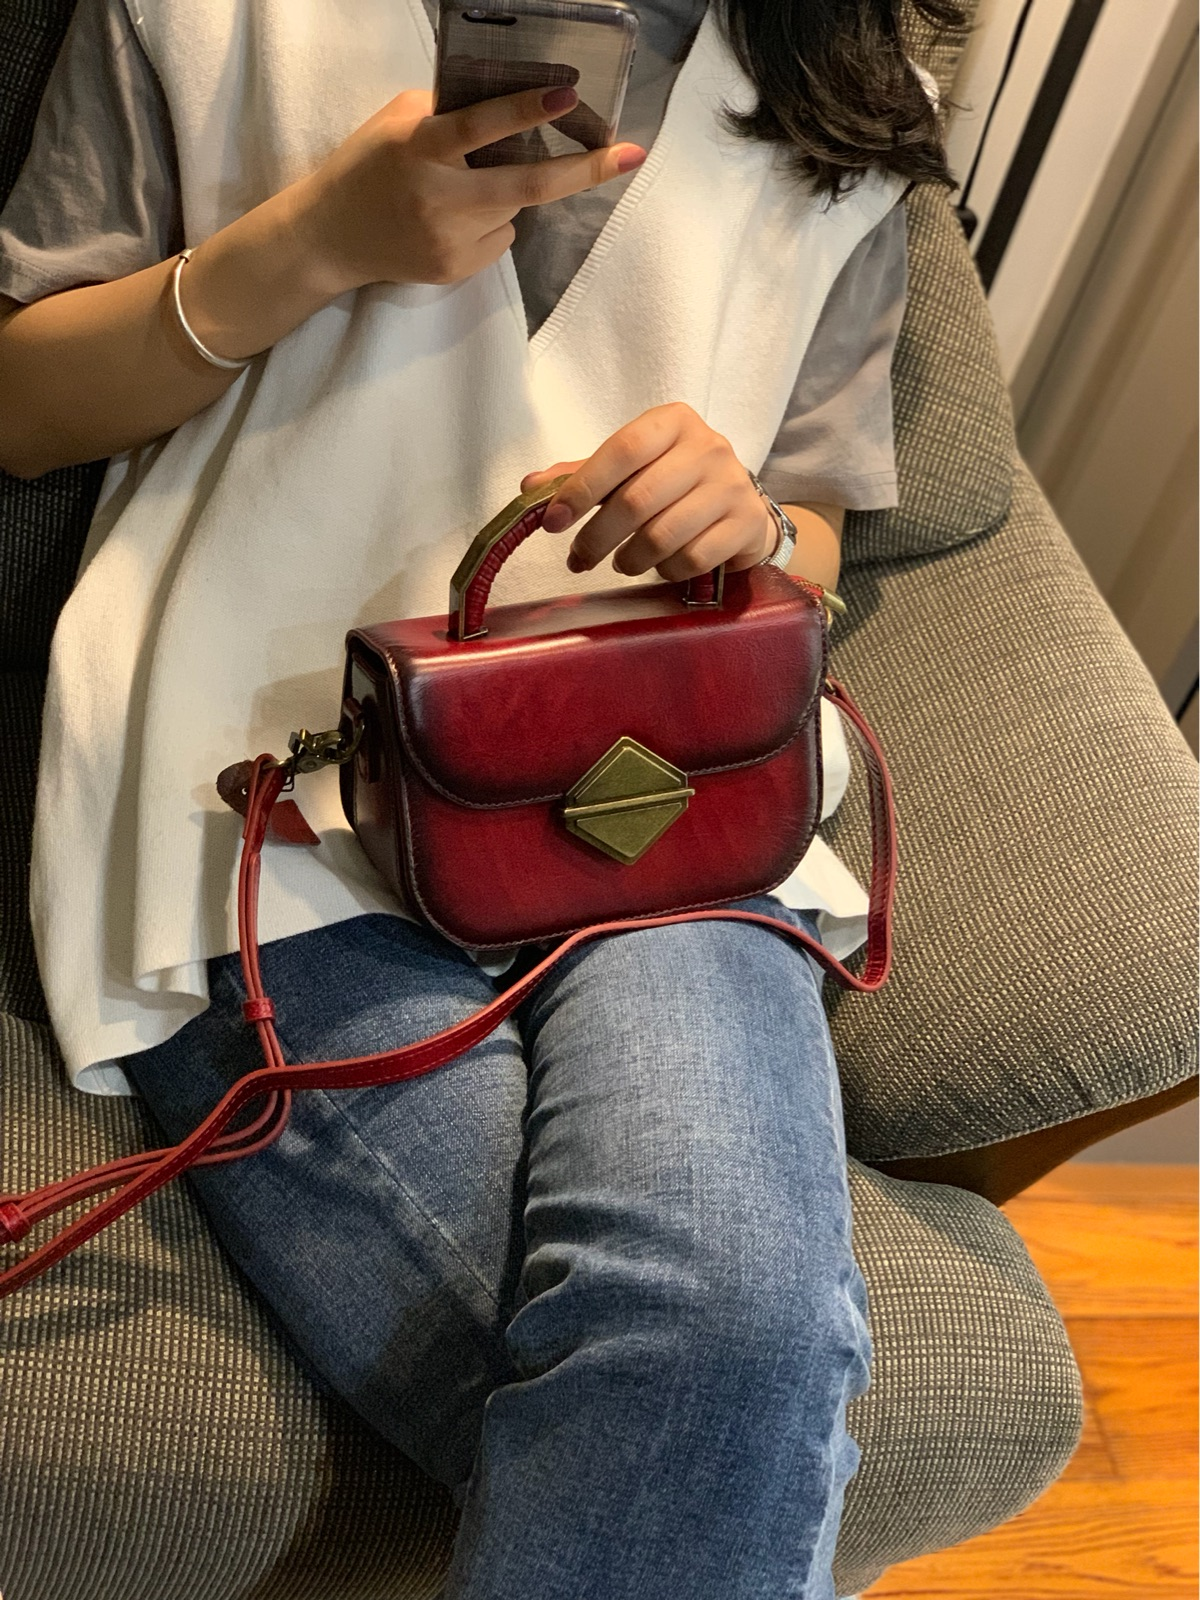 Women's Leather Small Red Satchel Handbag Shoulder Bag Fashion Small Red Leather Satchel Purse for Girls